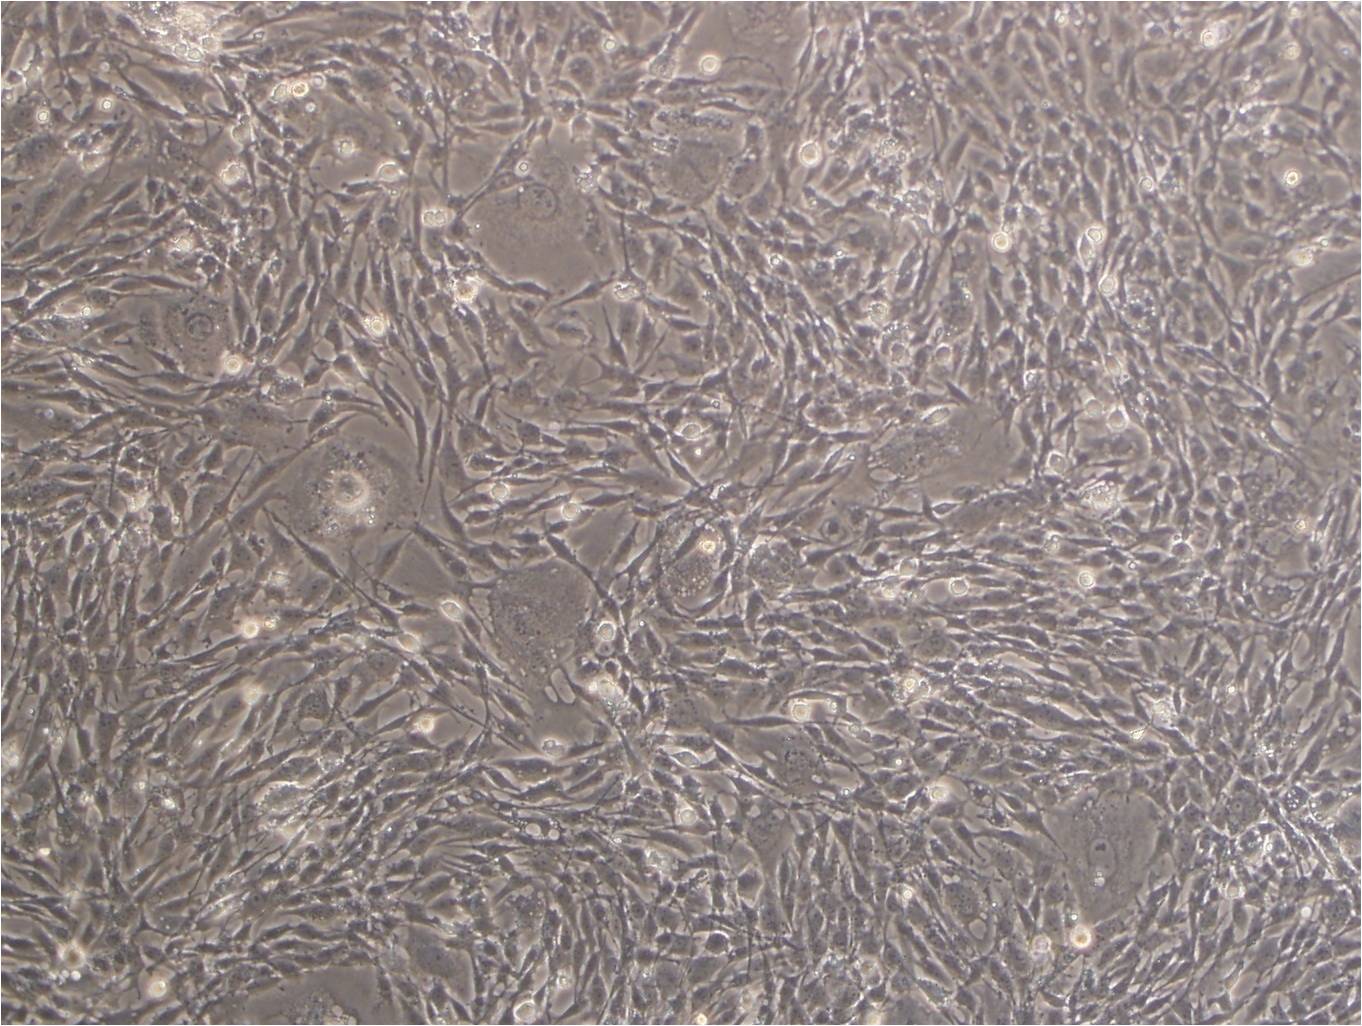 HO-8910PM Cells|人卵巢癌细胞系,HO-8910PM Cells